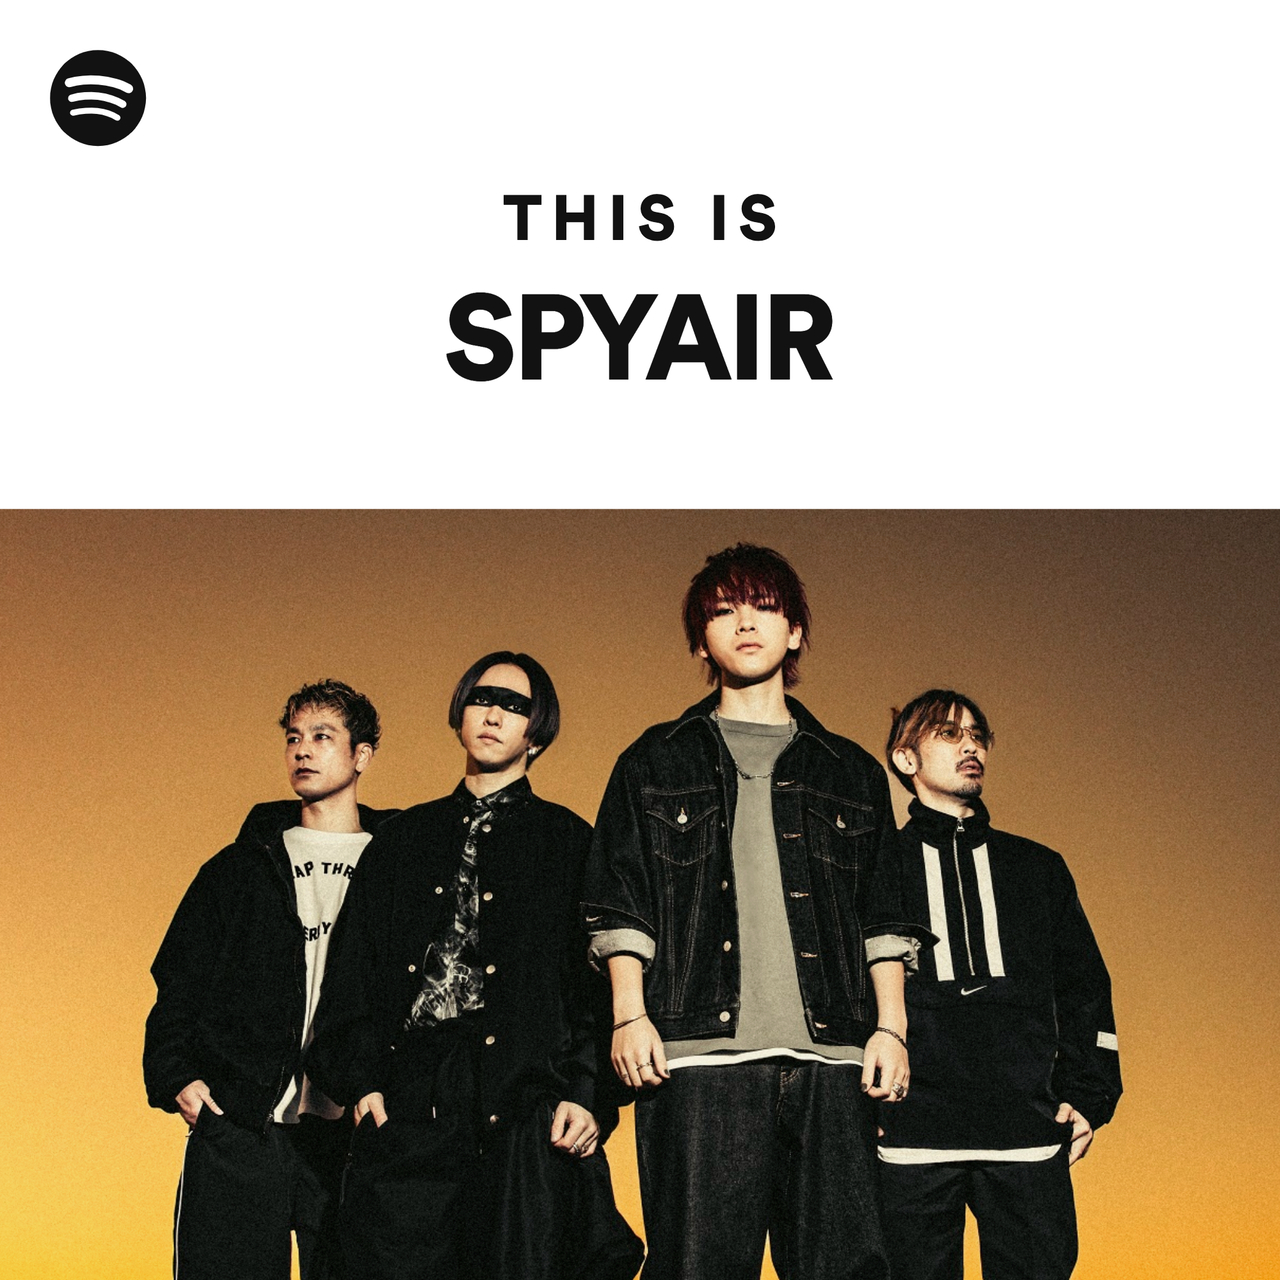 Spyair Spotify Listen Free